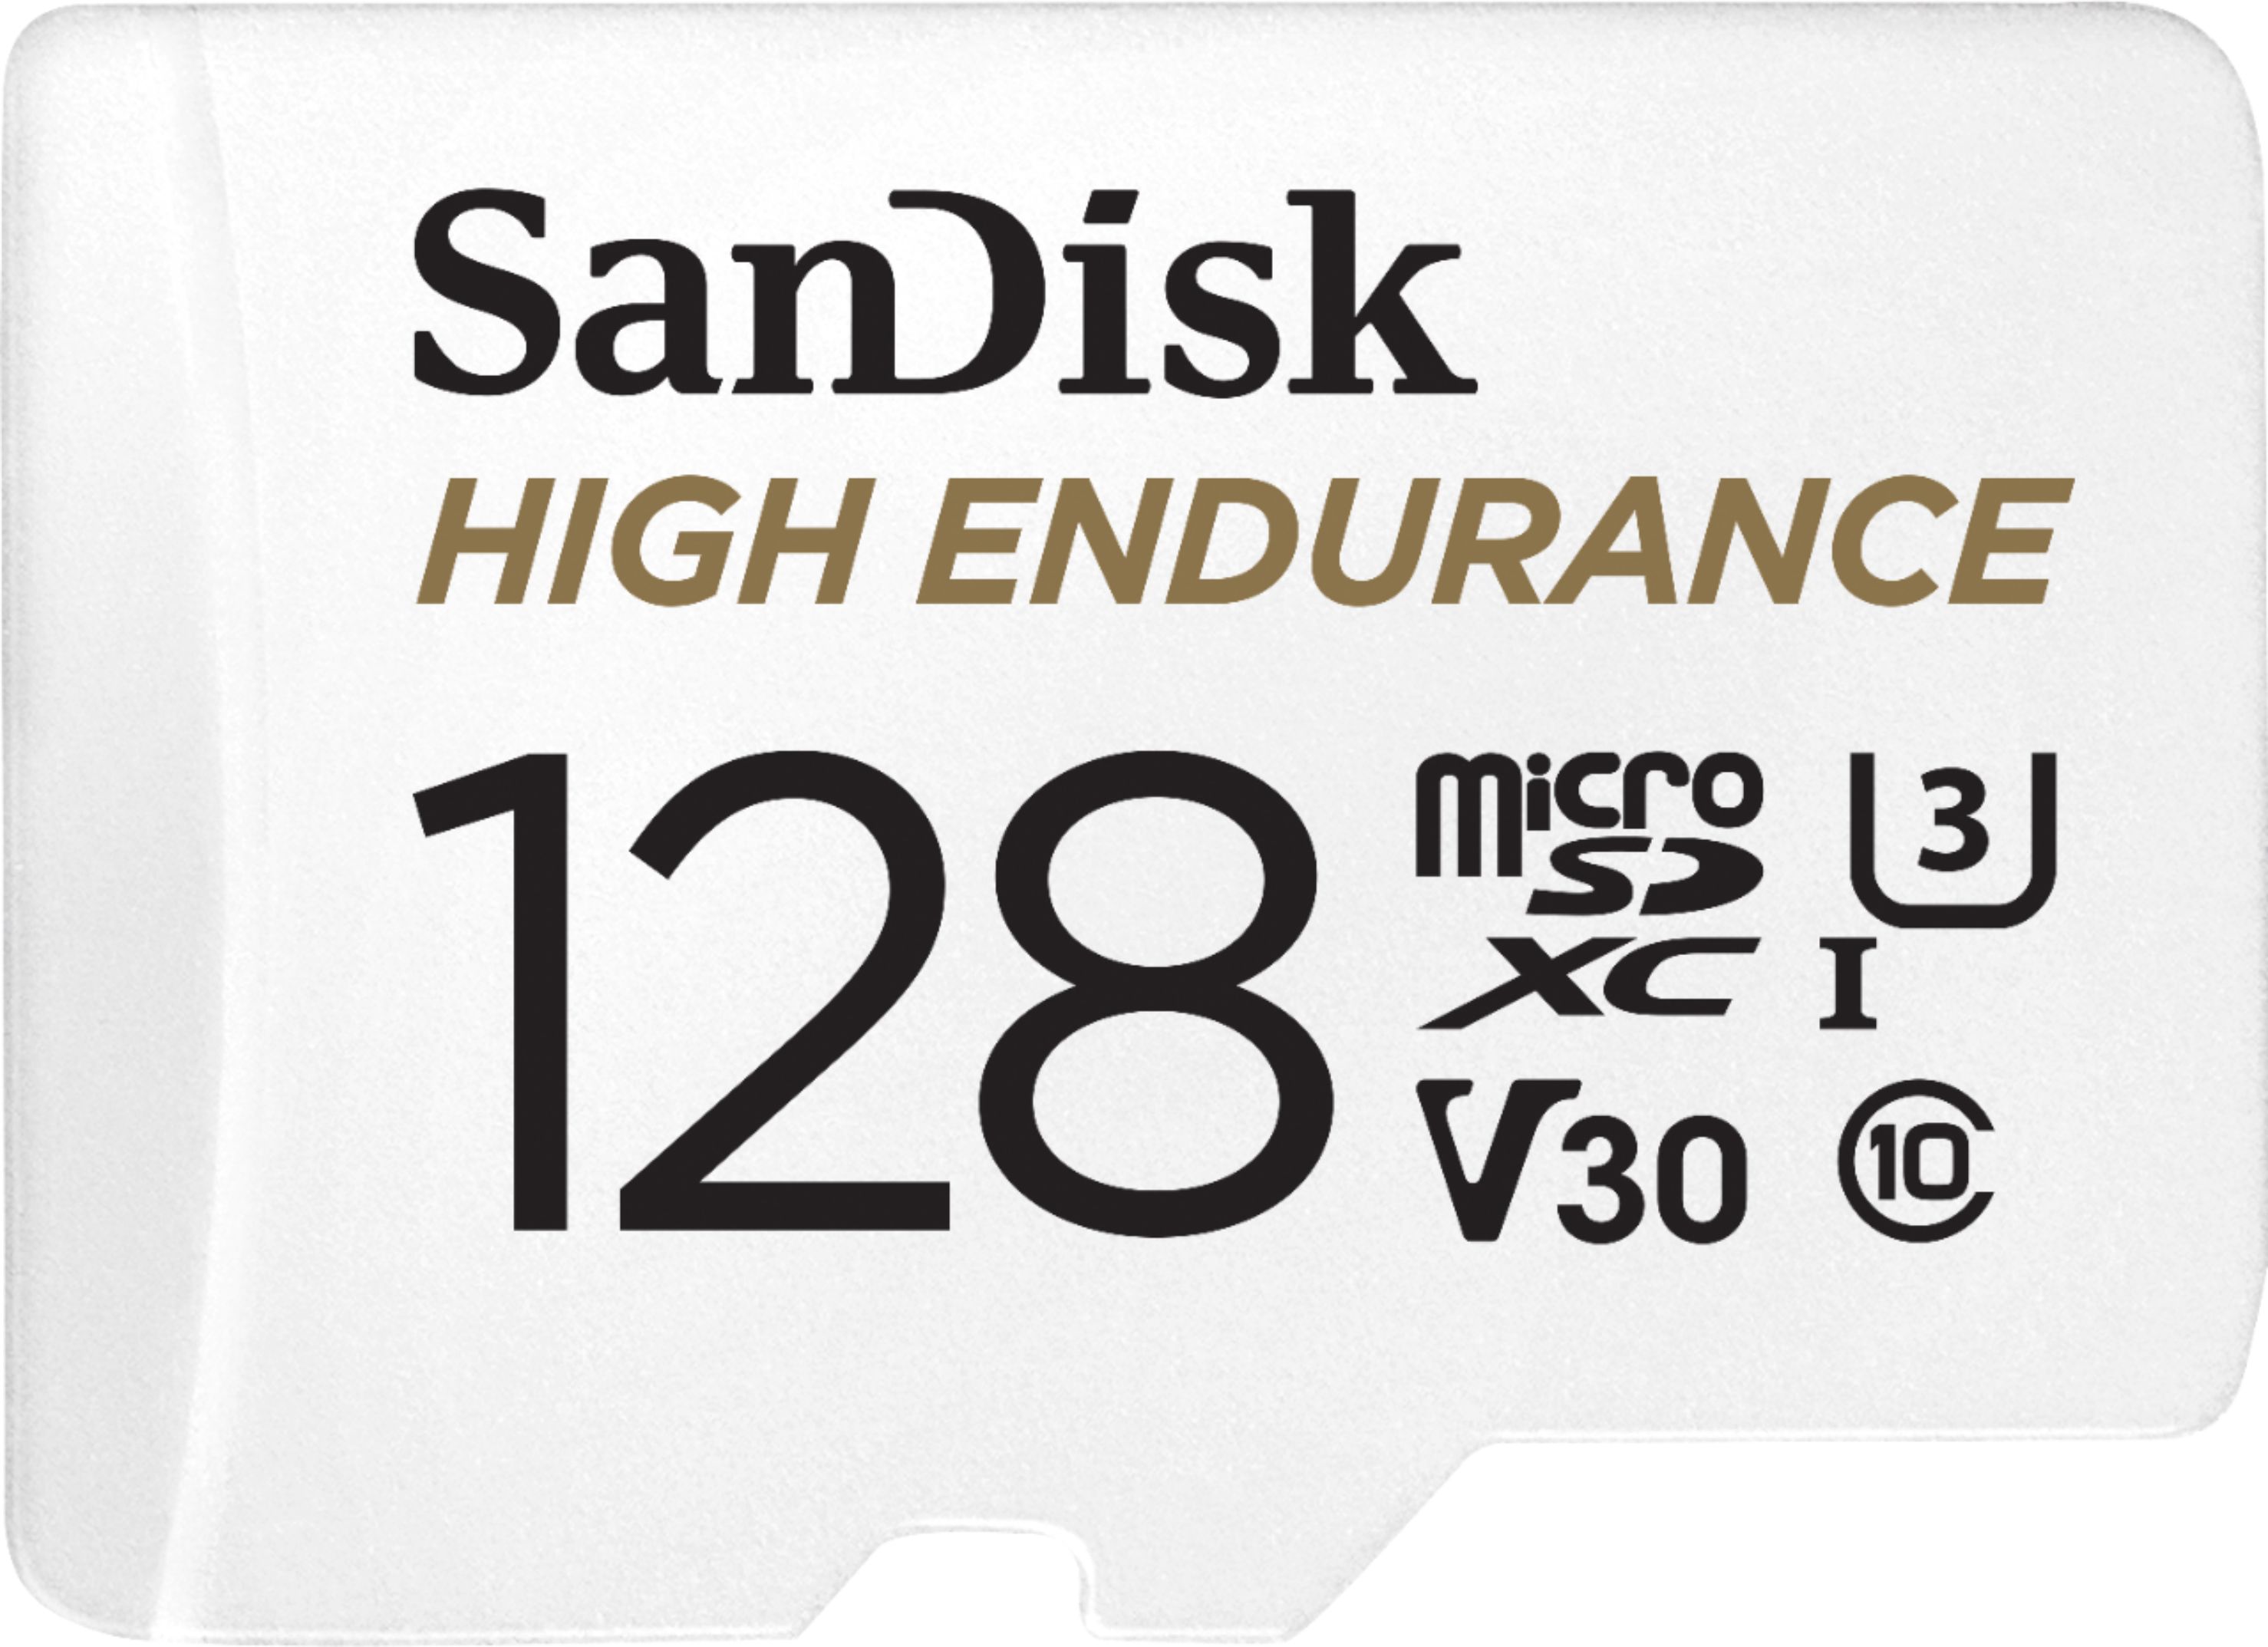 SanDisk - 128GB microSDXC High Endurance UHS-I Memory Card